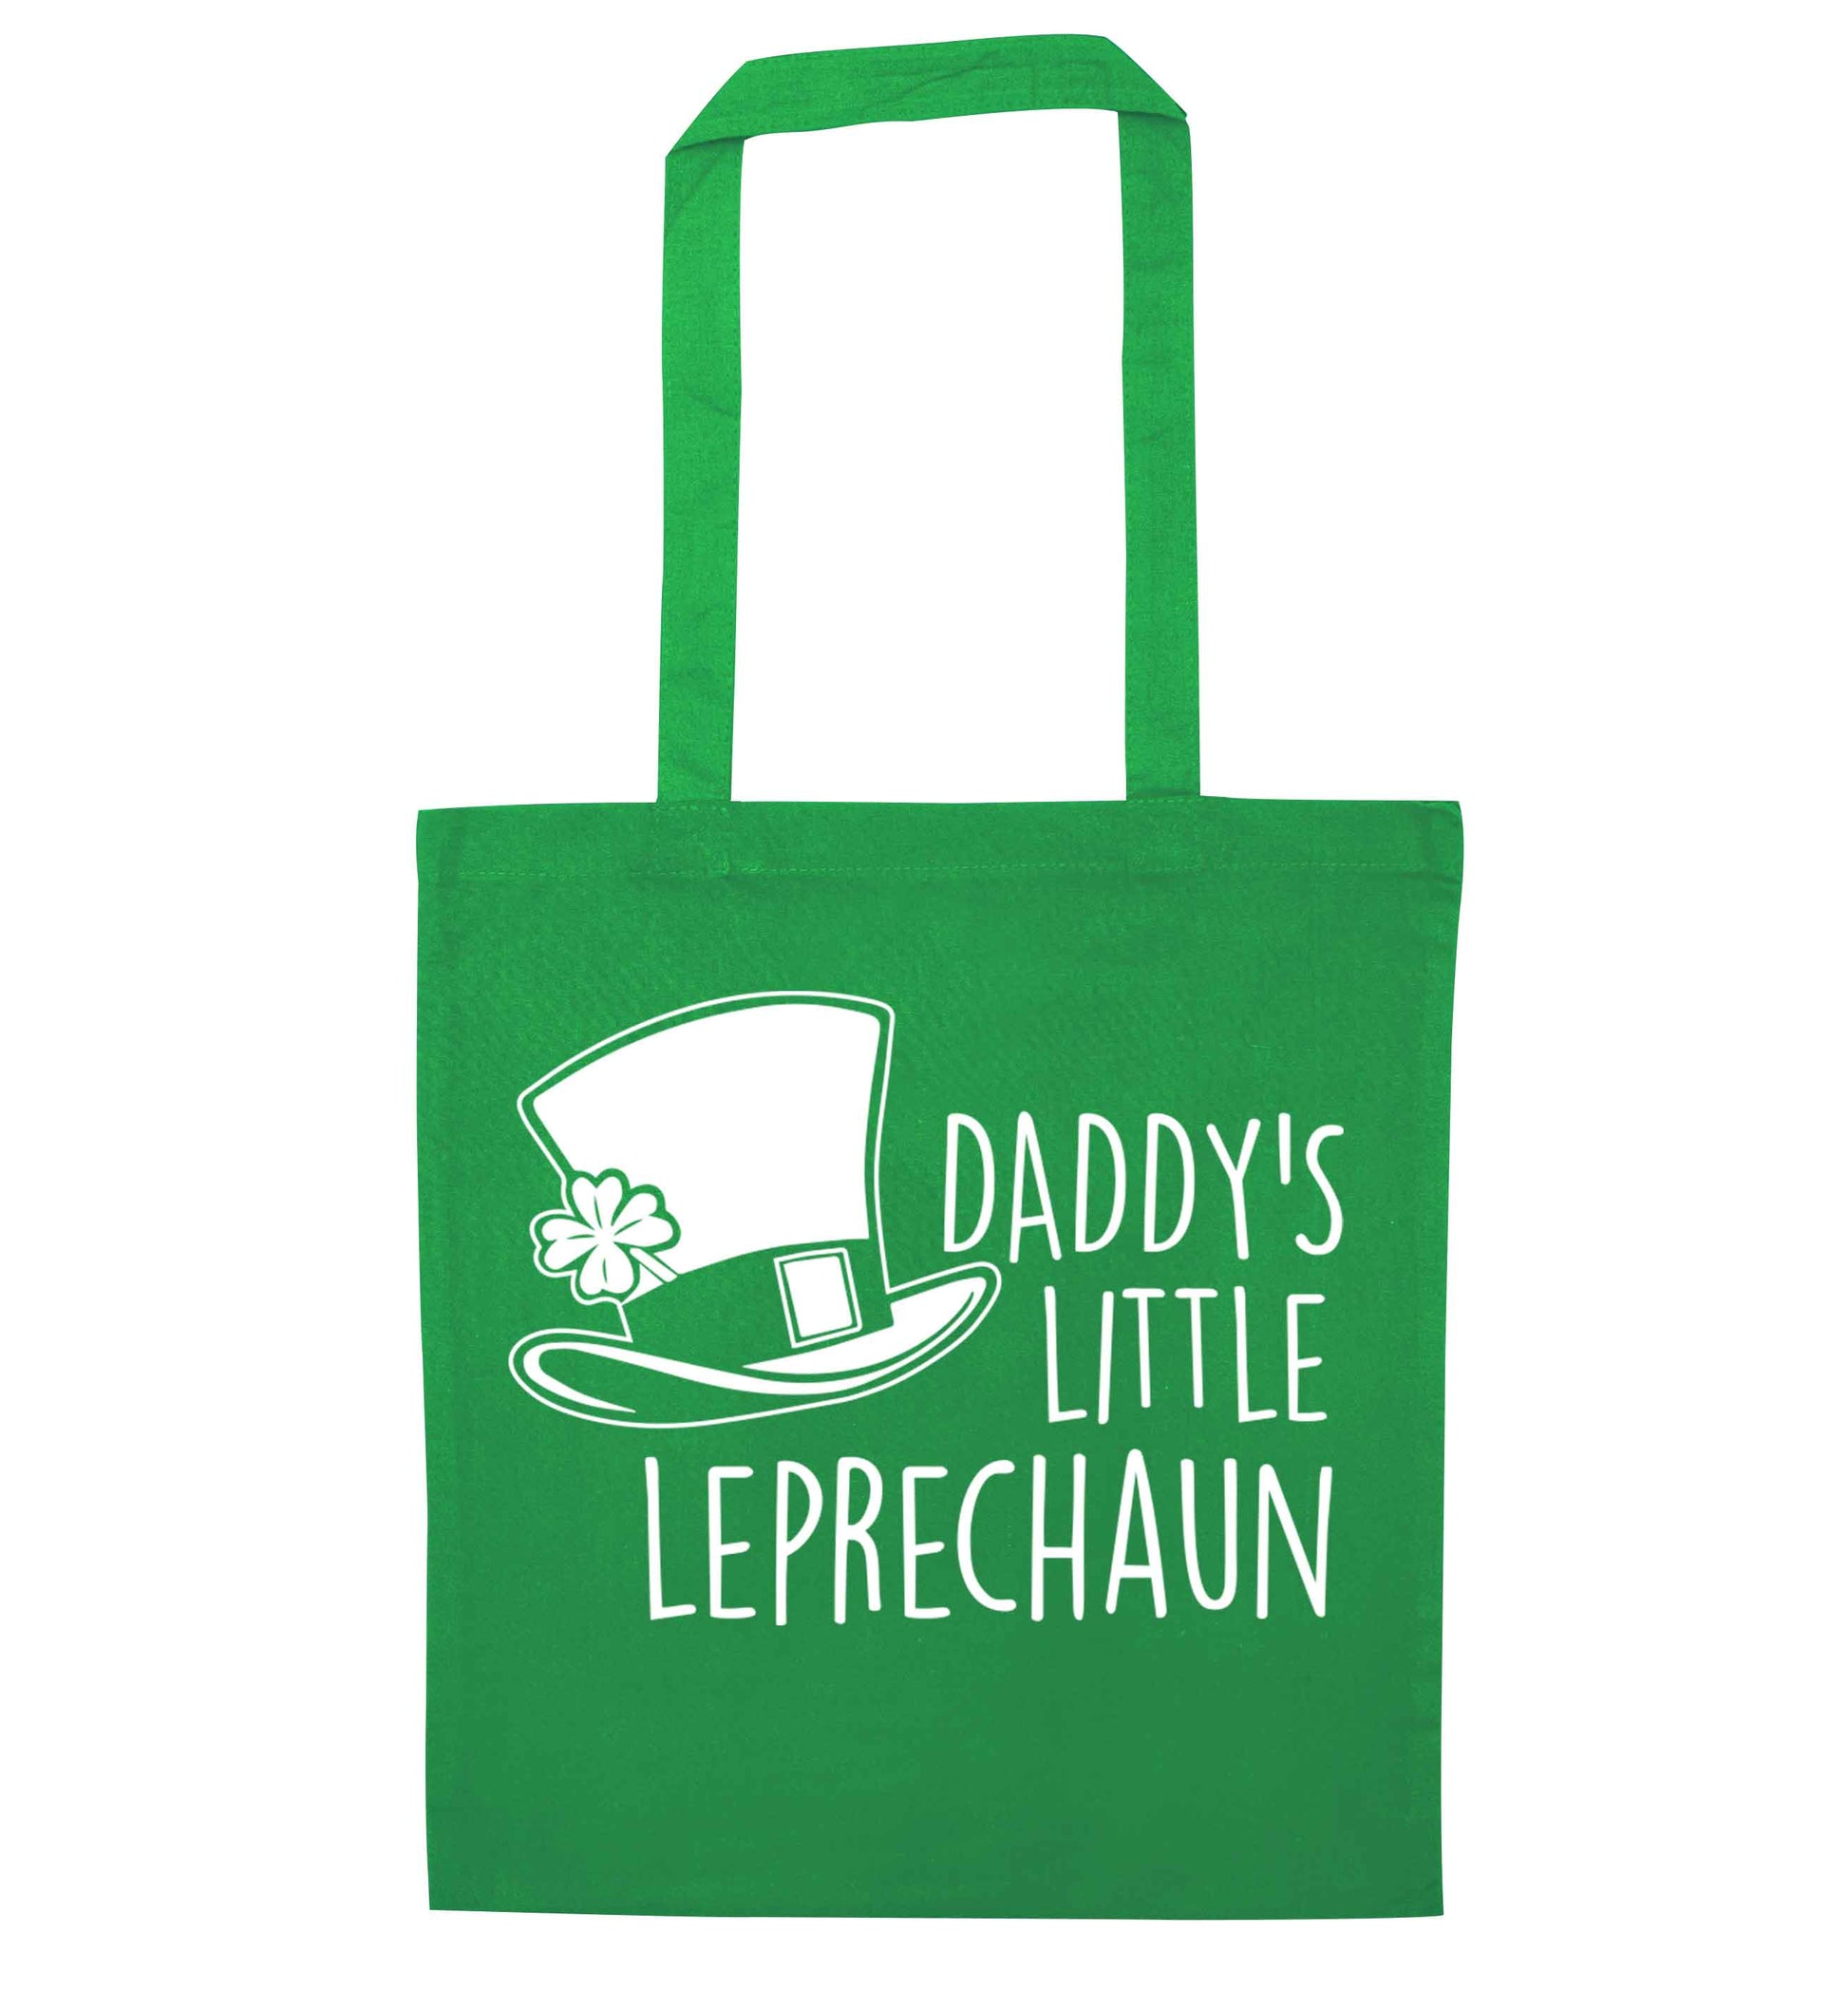 Daddy's little leprechaun green tote bag